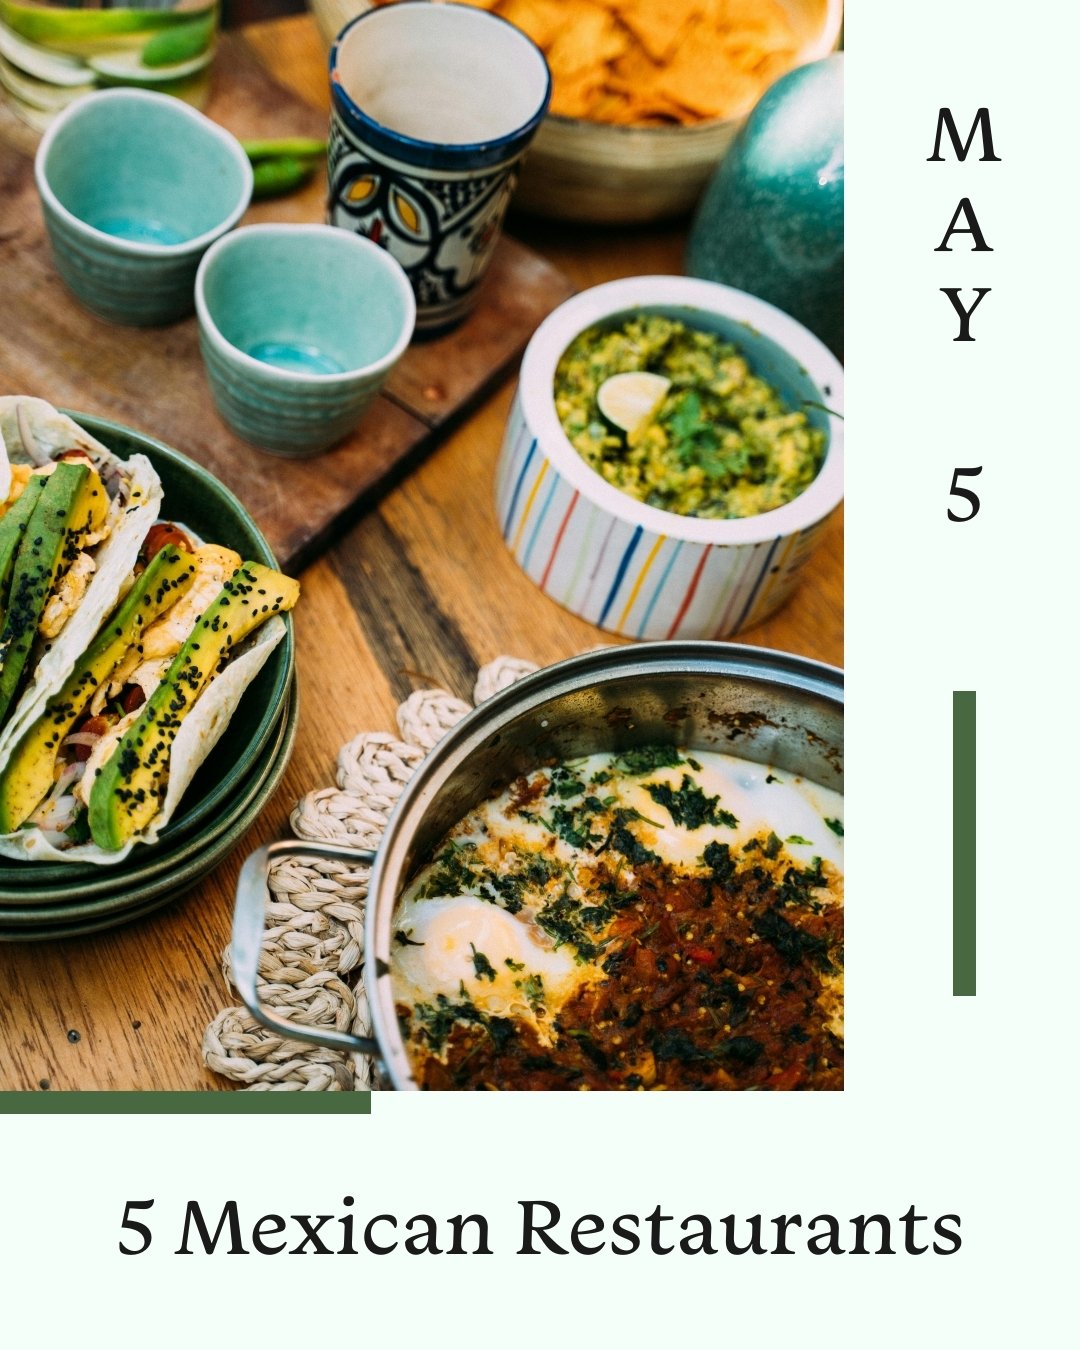 🎉 Cinco de Mayo is here! Celebrate with the best Mexican eats in town! 🌮🍹

Burrito House, Spokane - Burritos that are a feast in every bite!
De Leon&rsquo;s, Spokane- Authentic flavors, homemade salsa magic.
Tacos el Cabron, Spokane - Dive into de